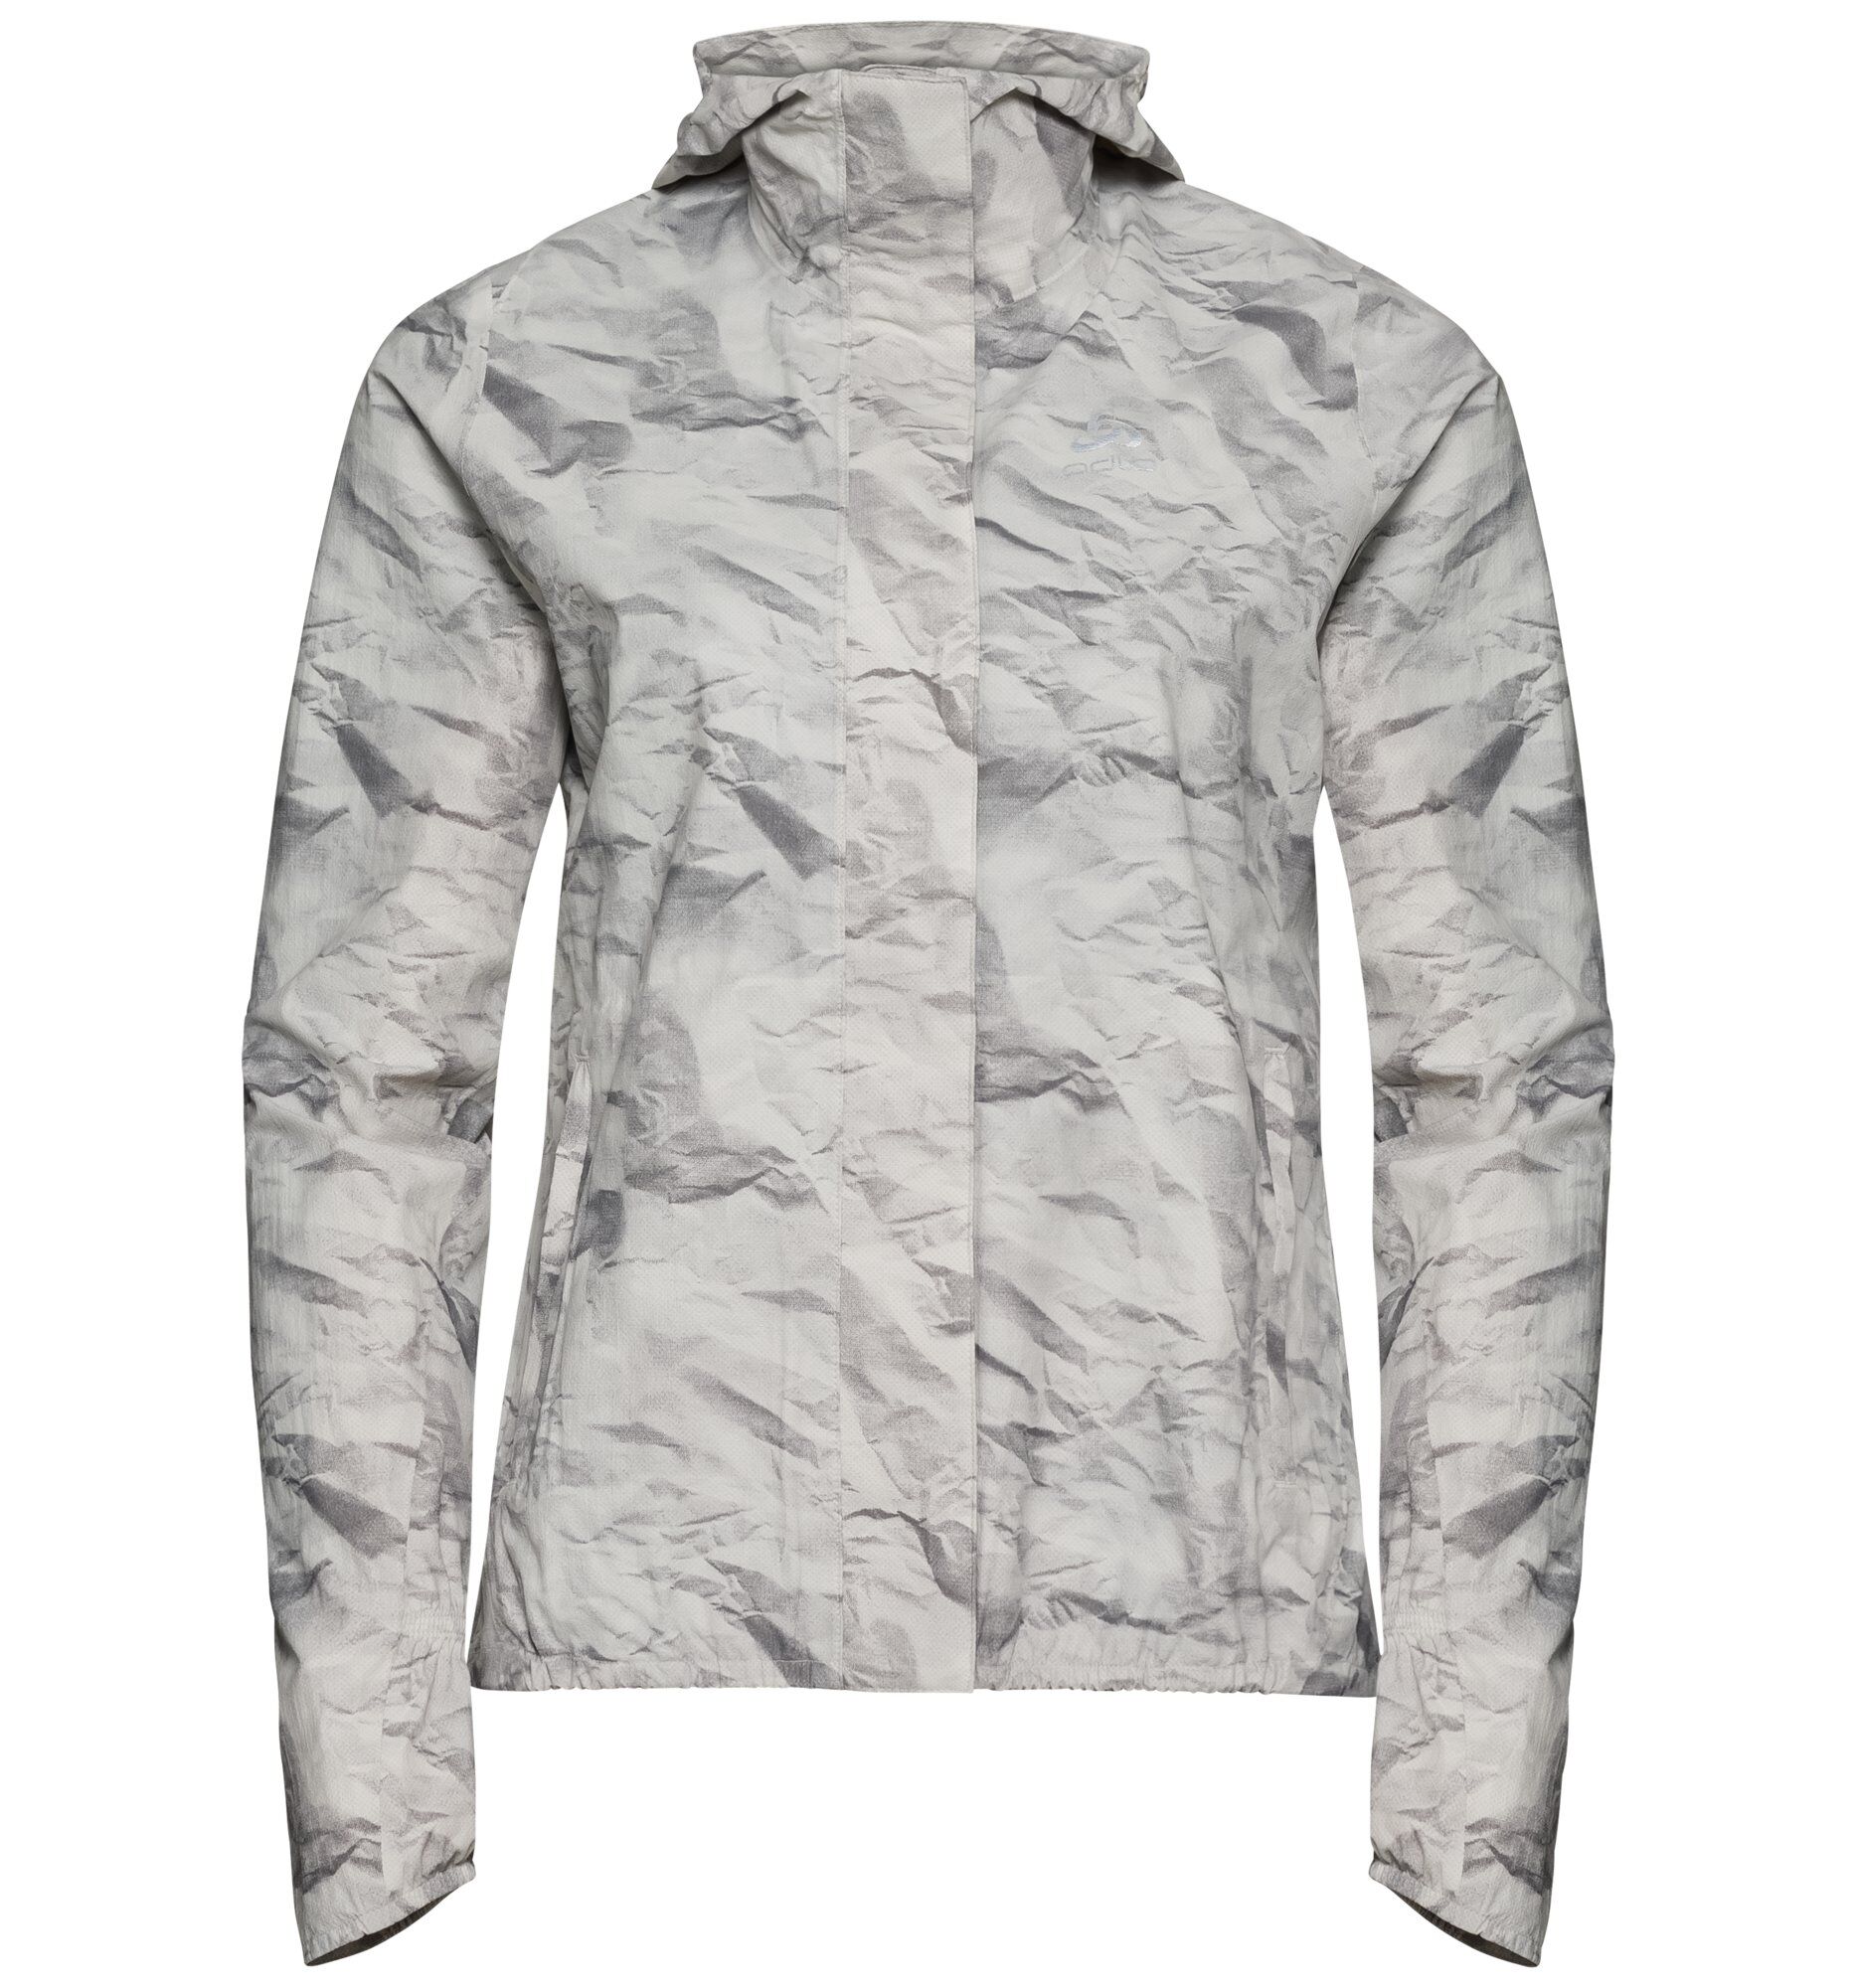 Odlo - FLI 2.5L - Hardshell jacket - Women's